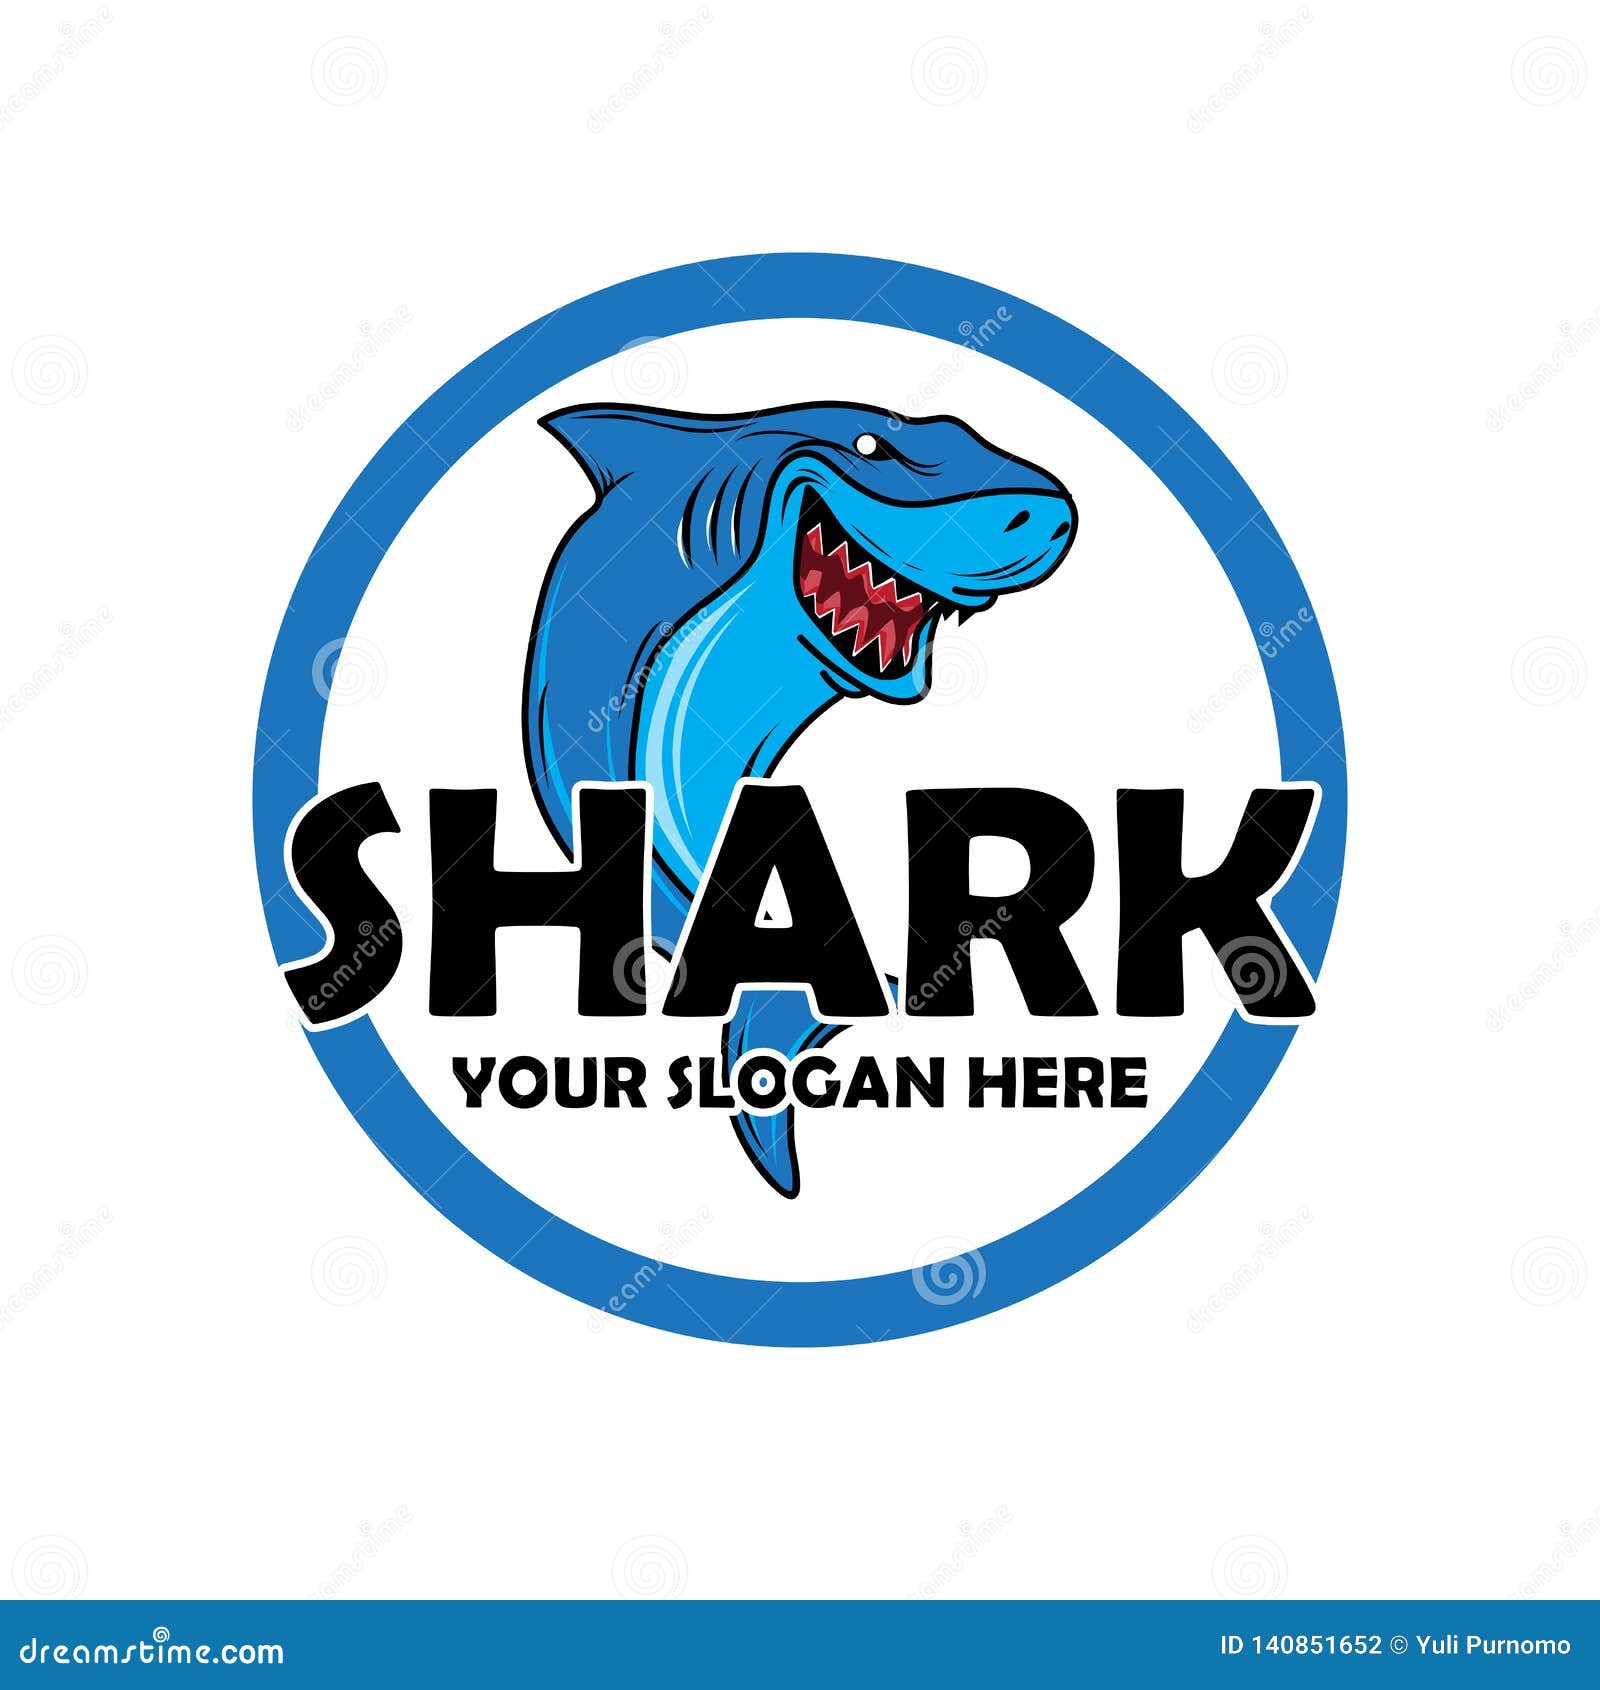 Shark Vector Image Illustration Stock Illustration - Illustration of ...